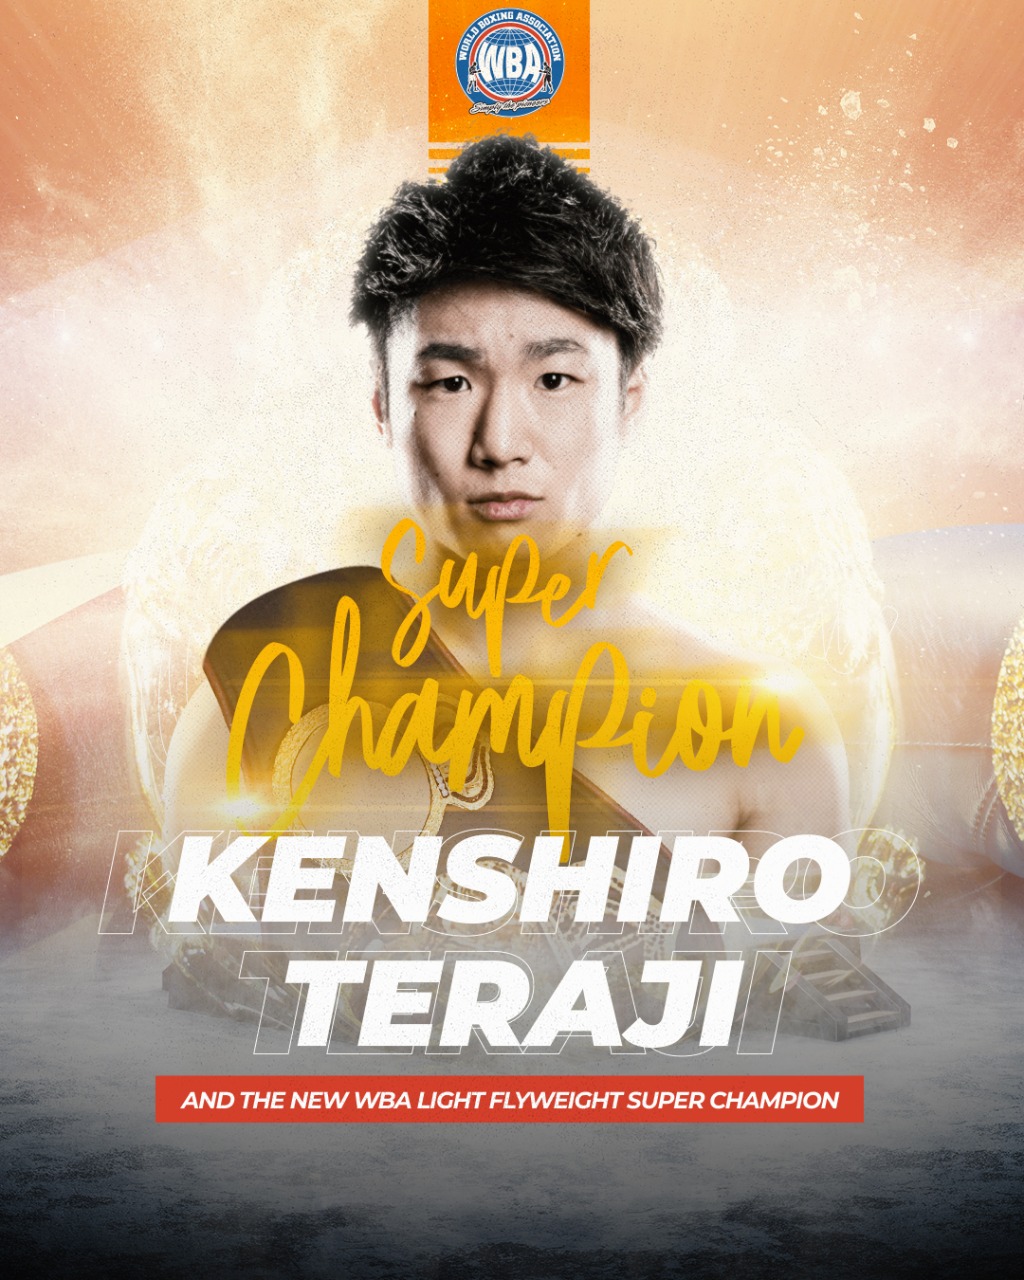 Kenshiro knocked out Kyoguchi to become new WBA champion